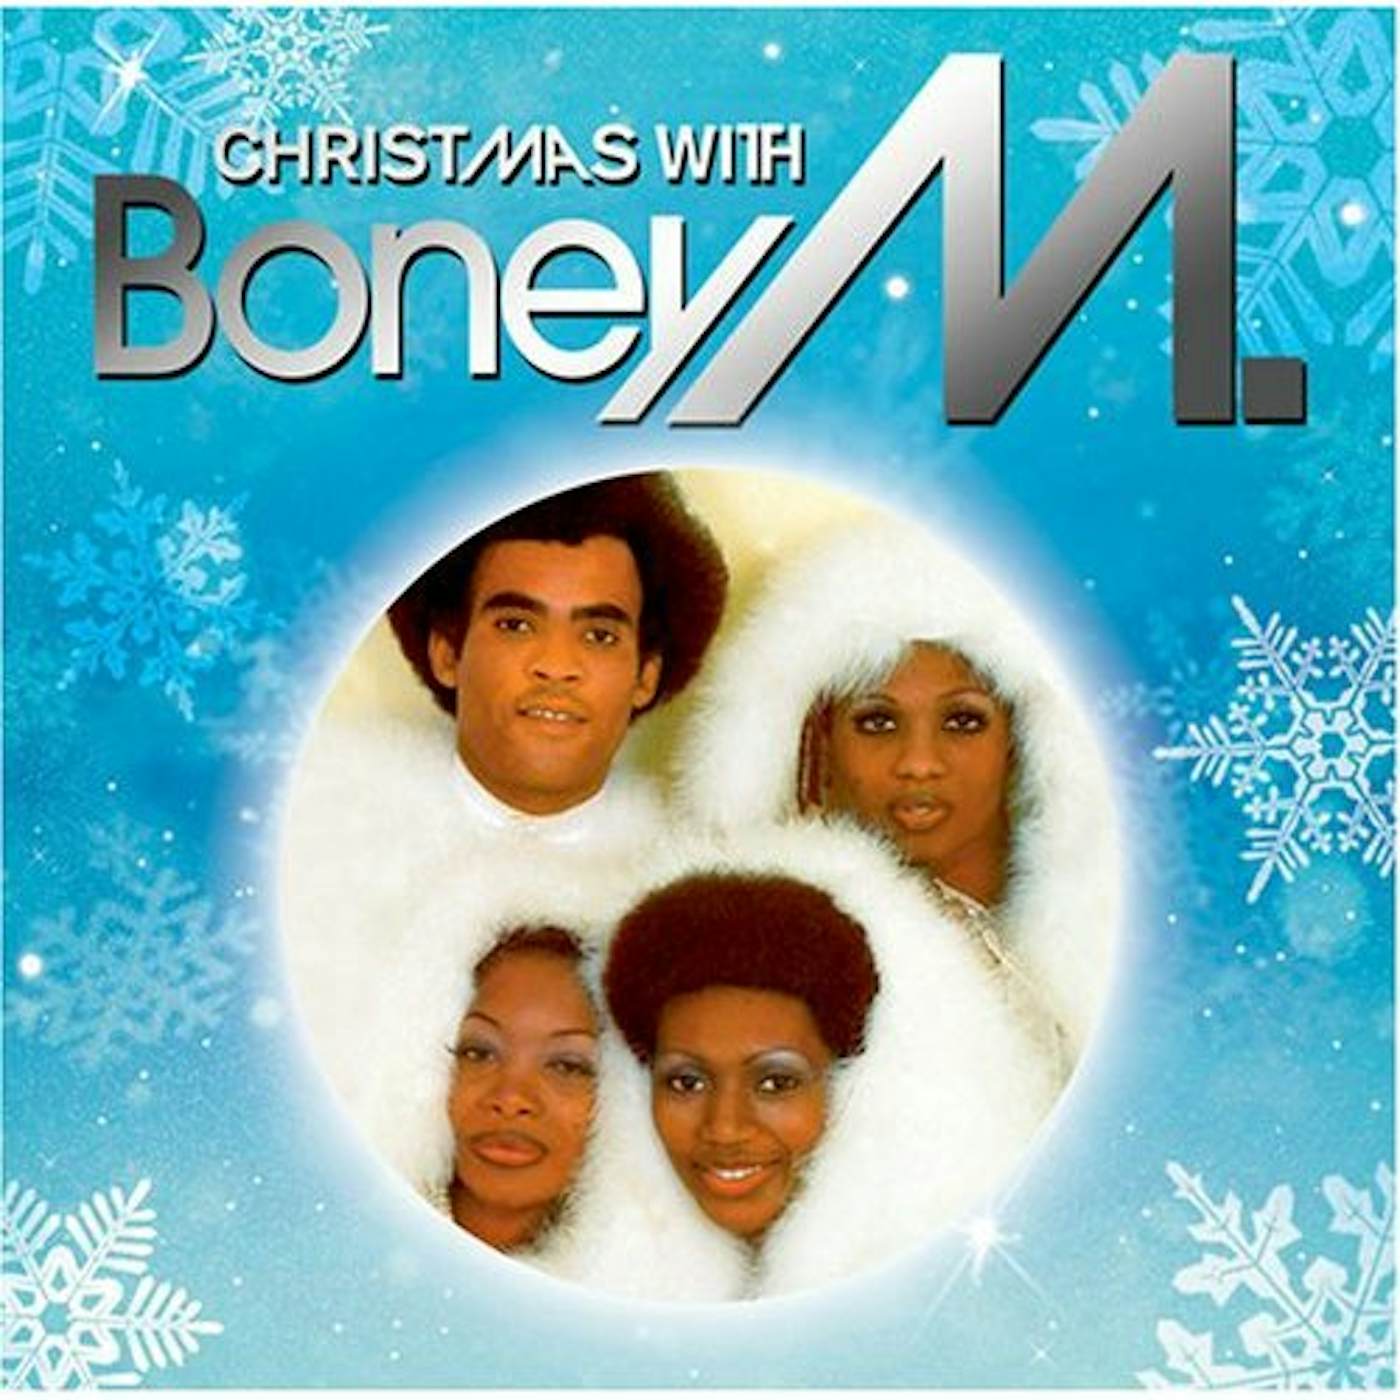 CHRISTMAS WITH Boney M. CD